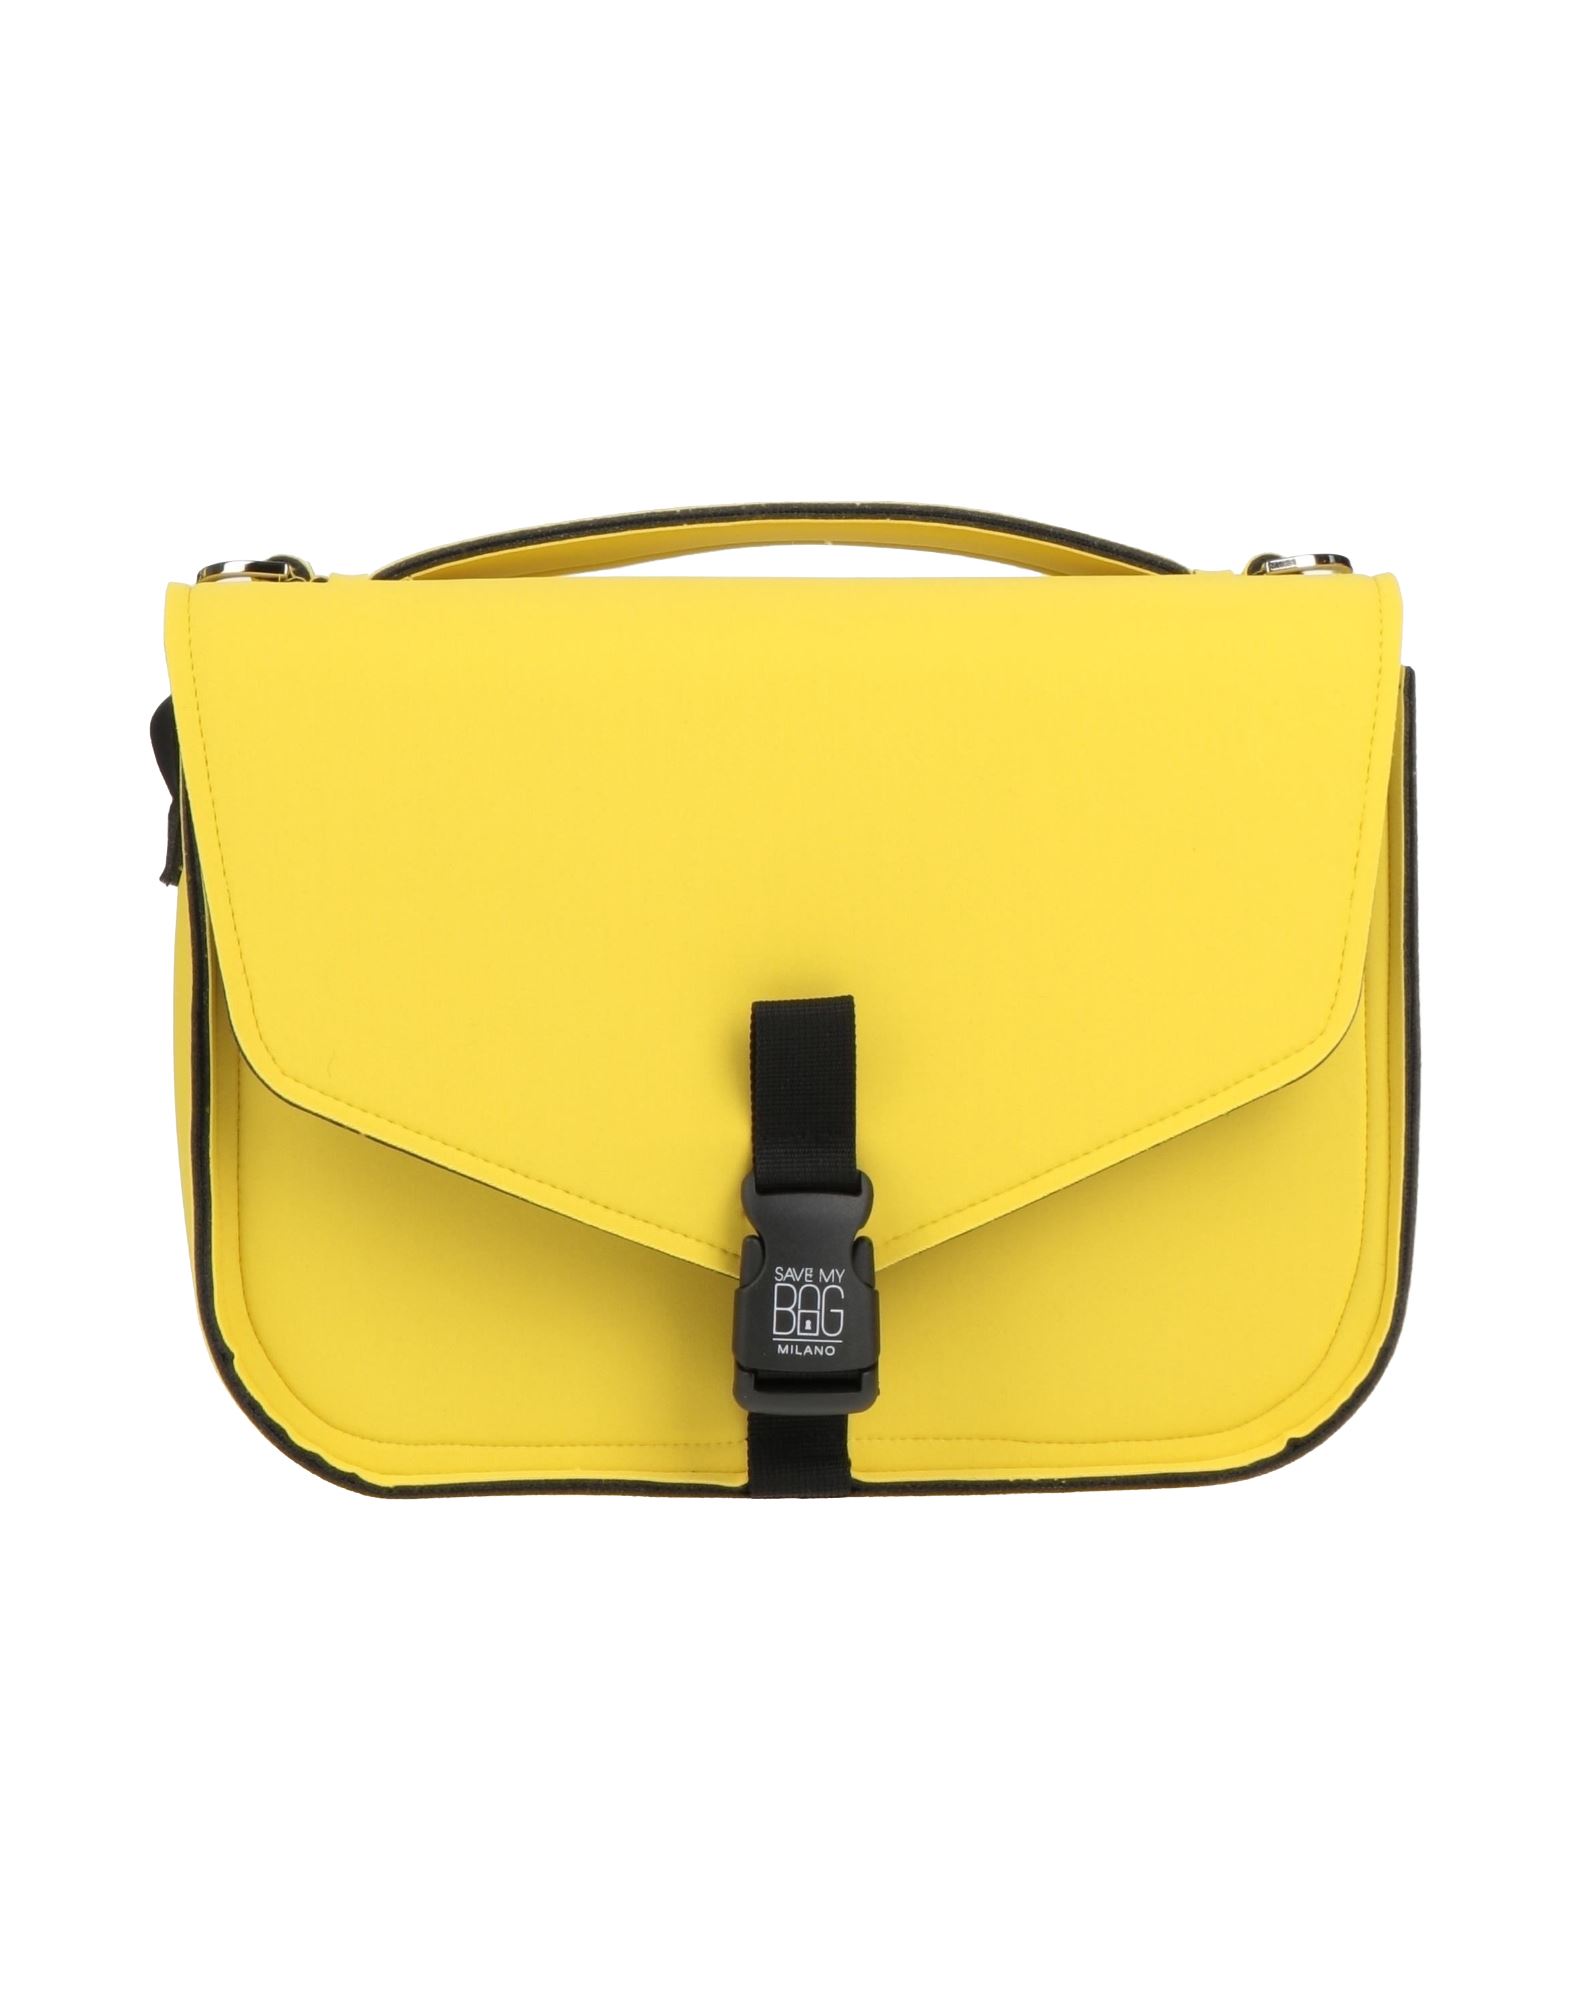 Save My Bag Handbags In Yellow